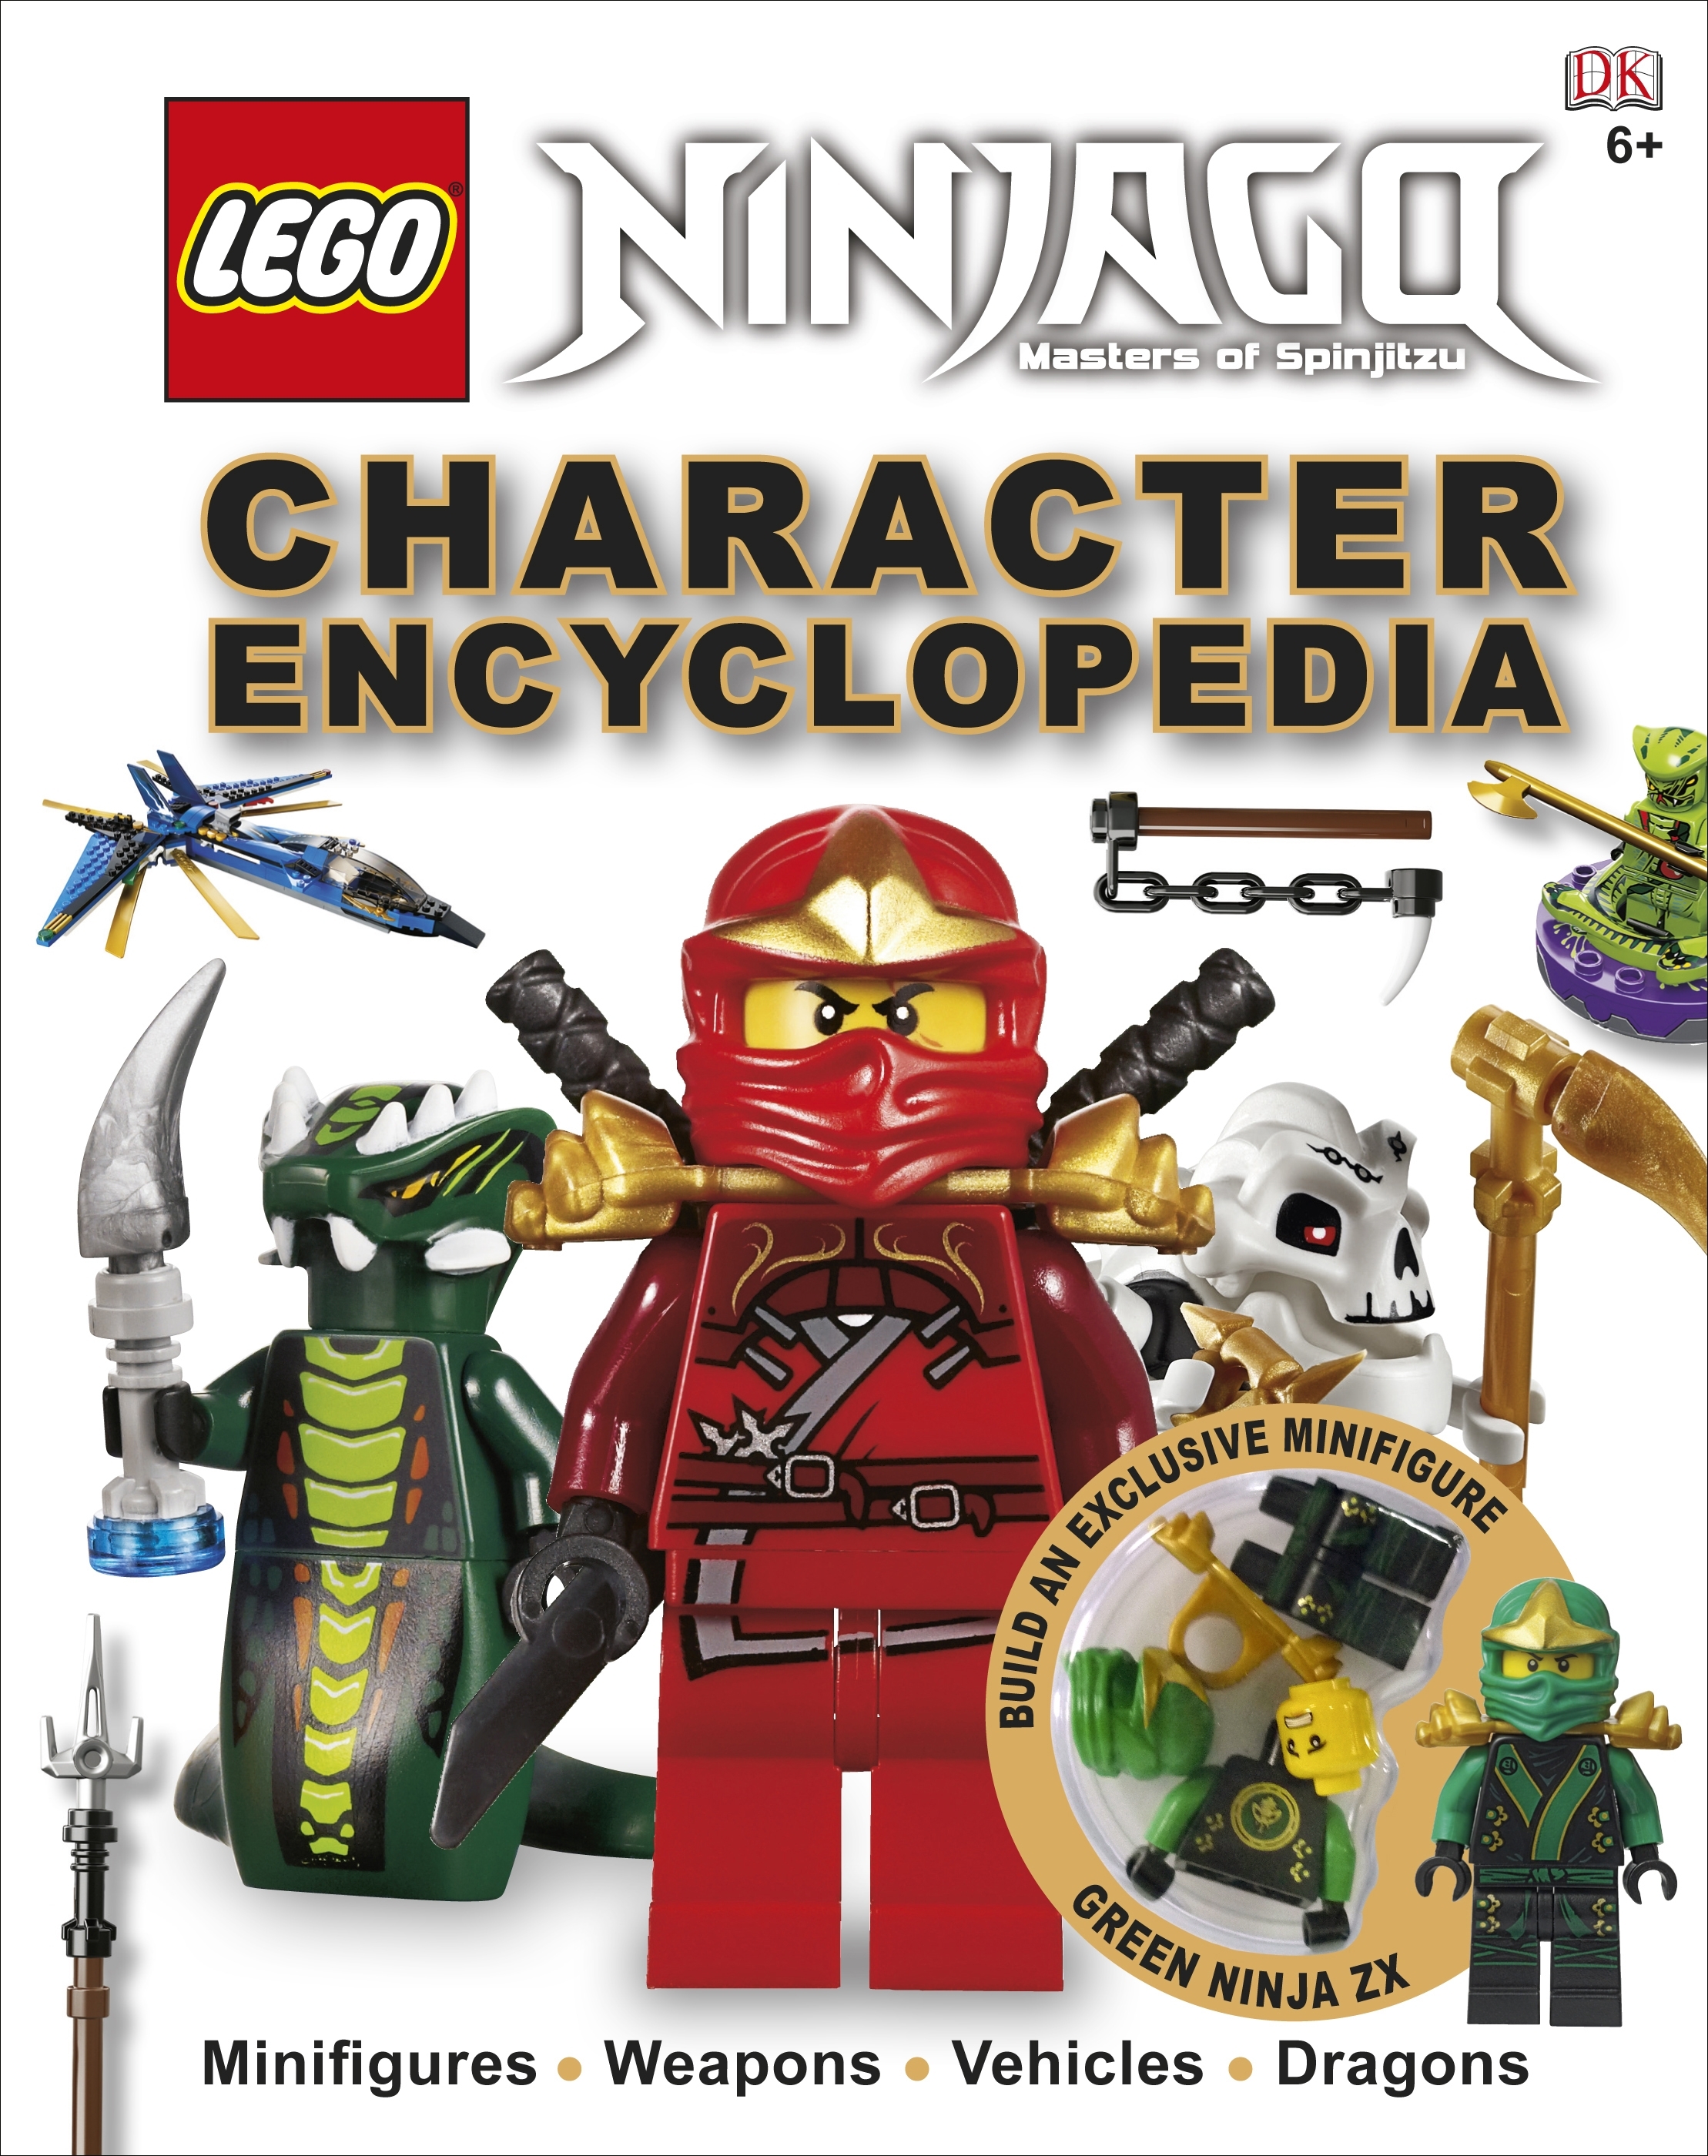 LEGO Ninjago Character Encyclopedia competition winners